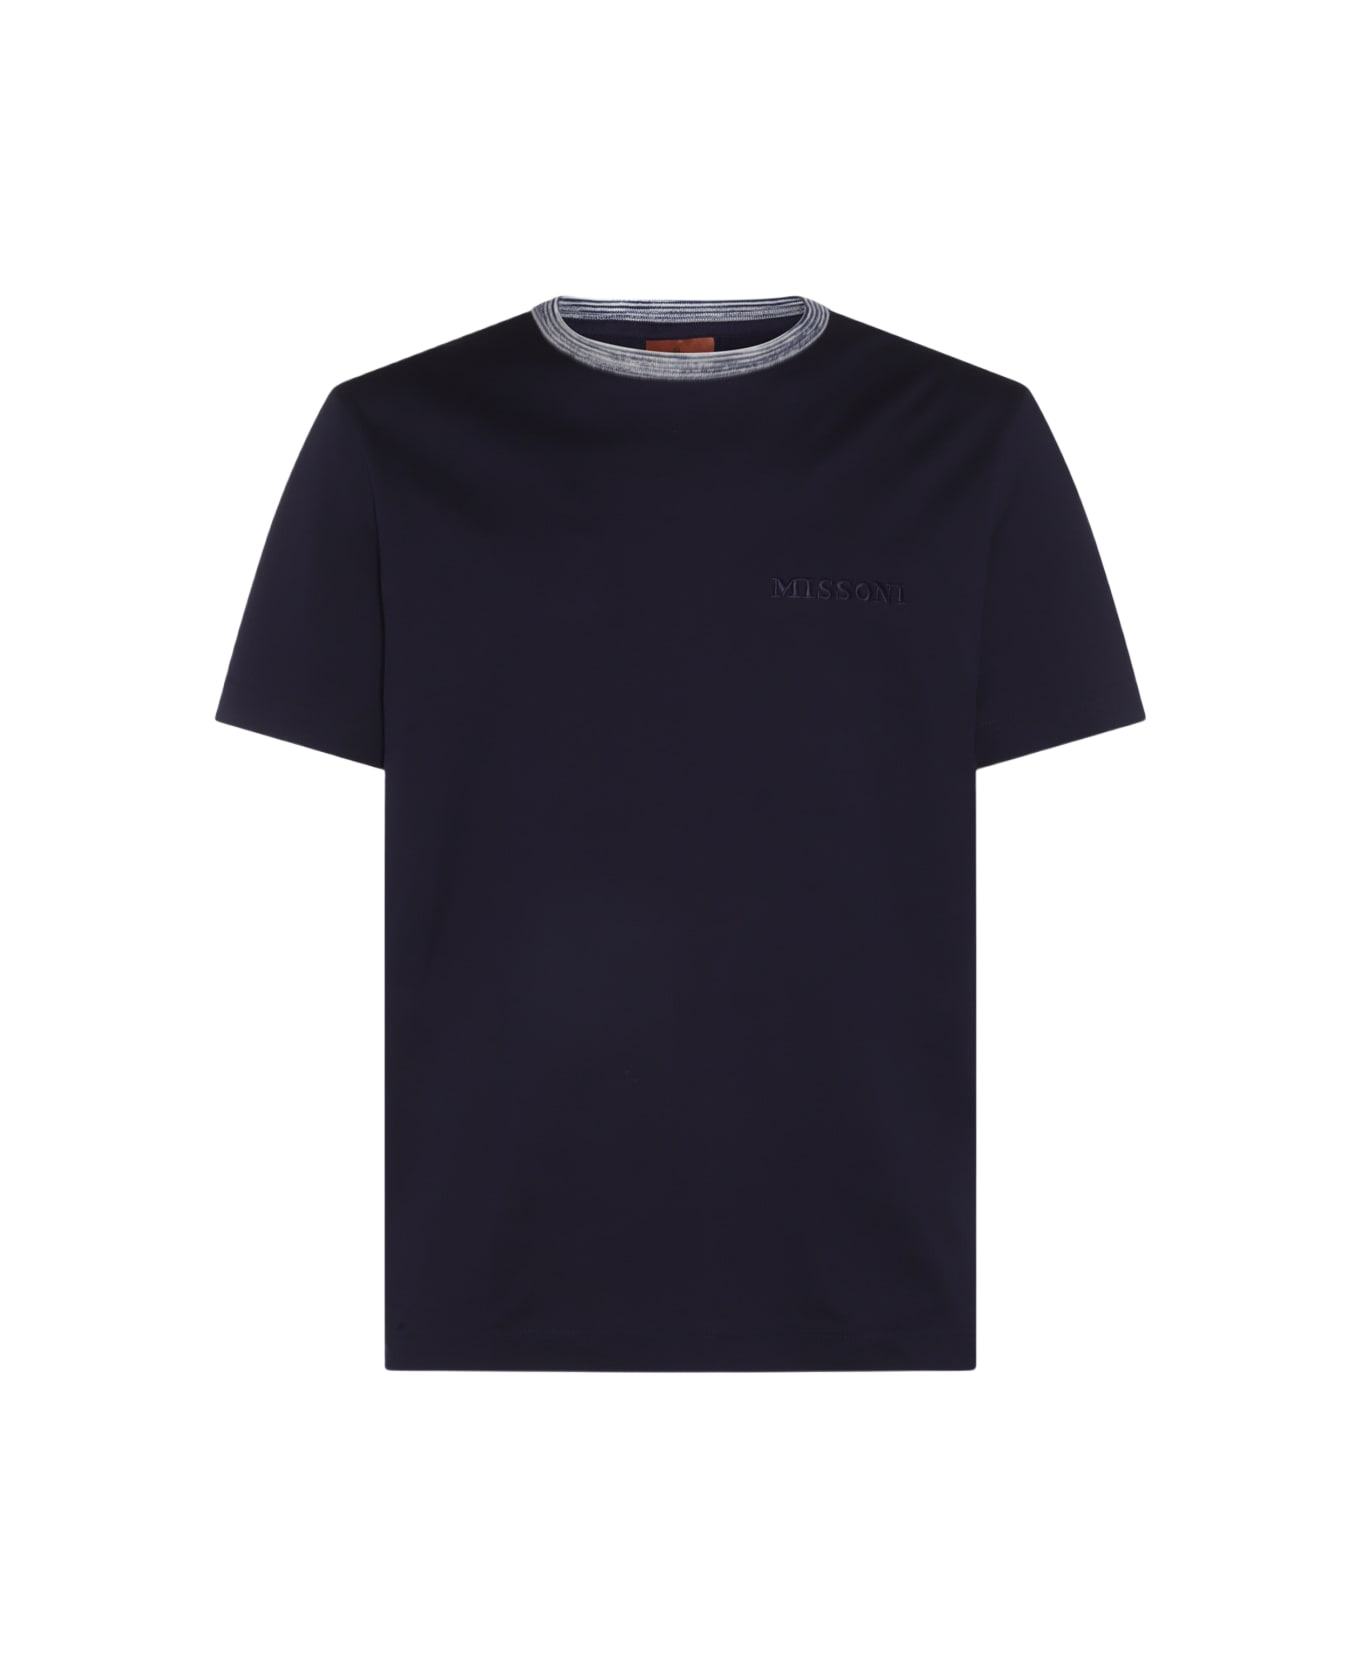 Missoni Black Cotton T-shirt - Blue